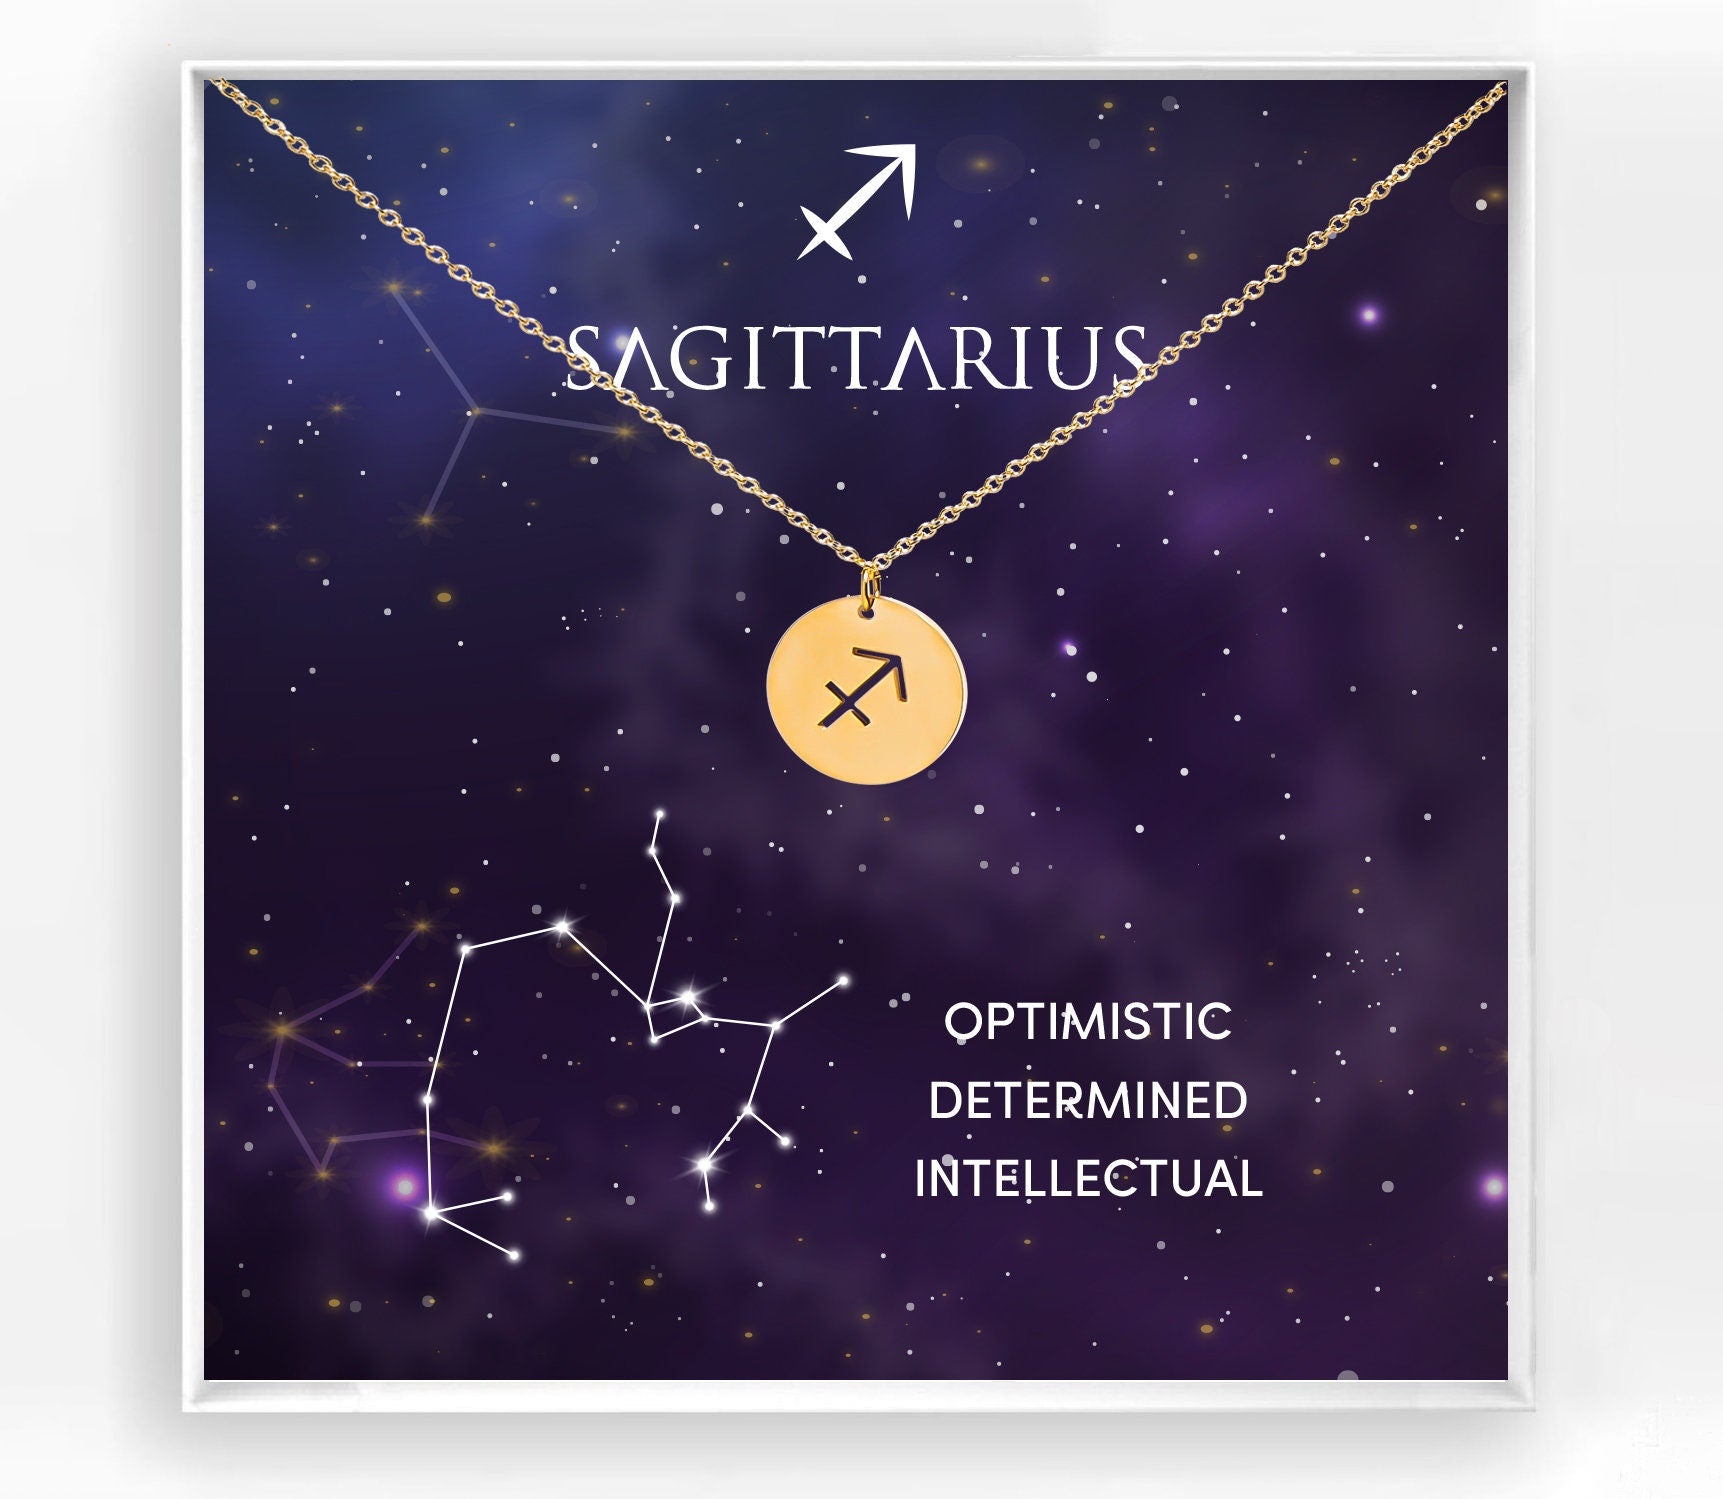 Sagittarius Zodiac Necklace